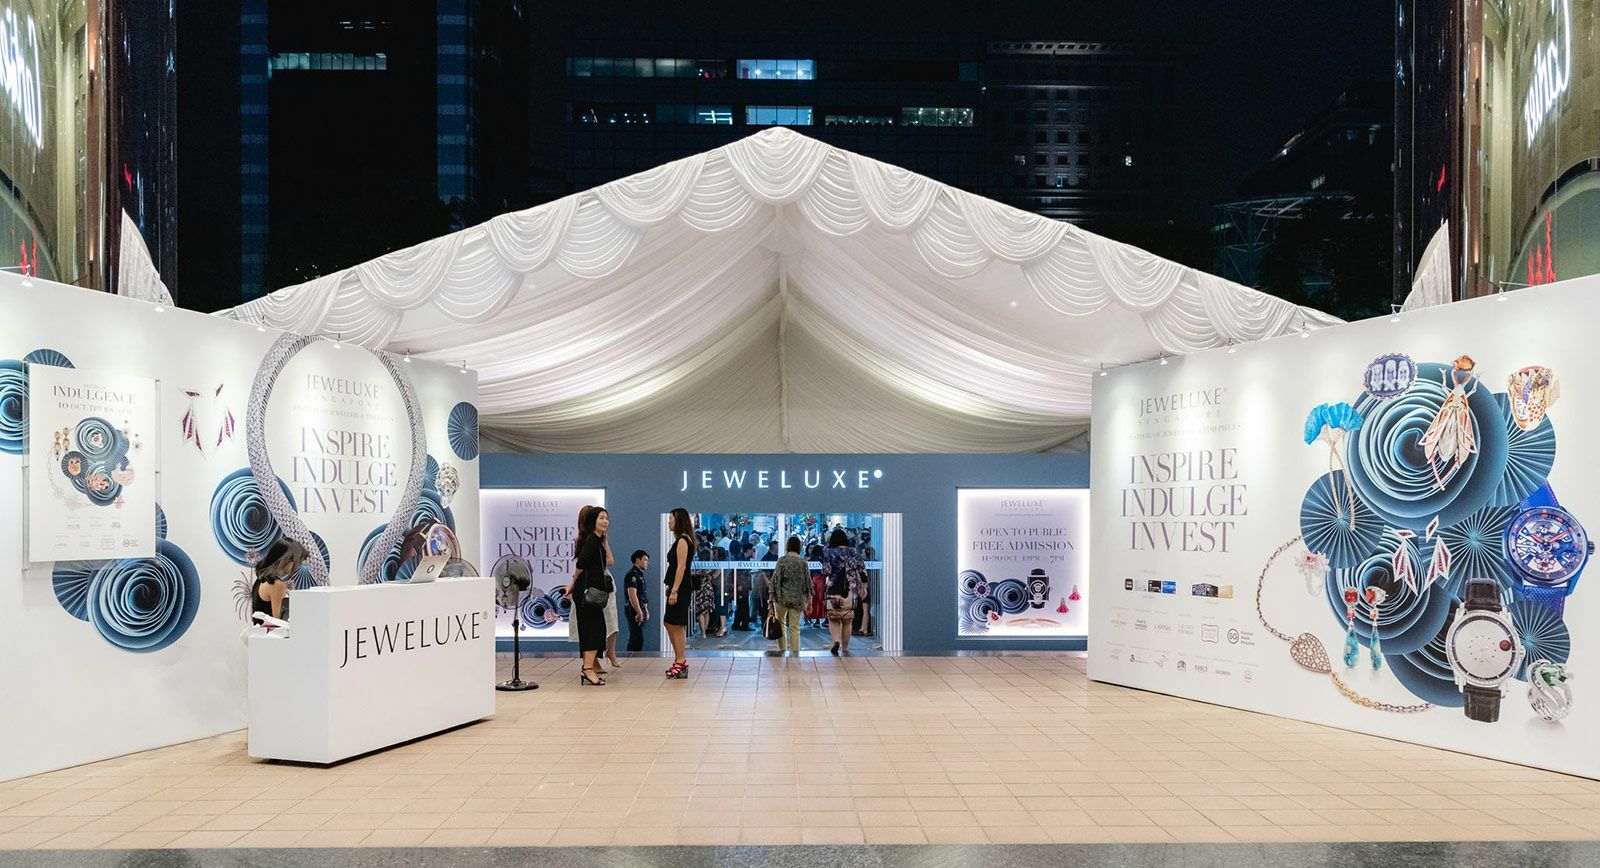 Jeweluxe exhibition tent in Singapore